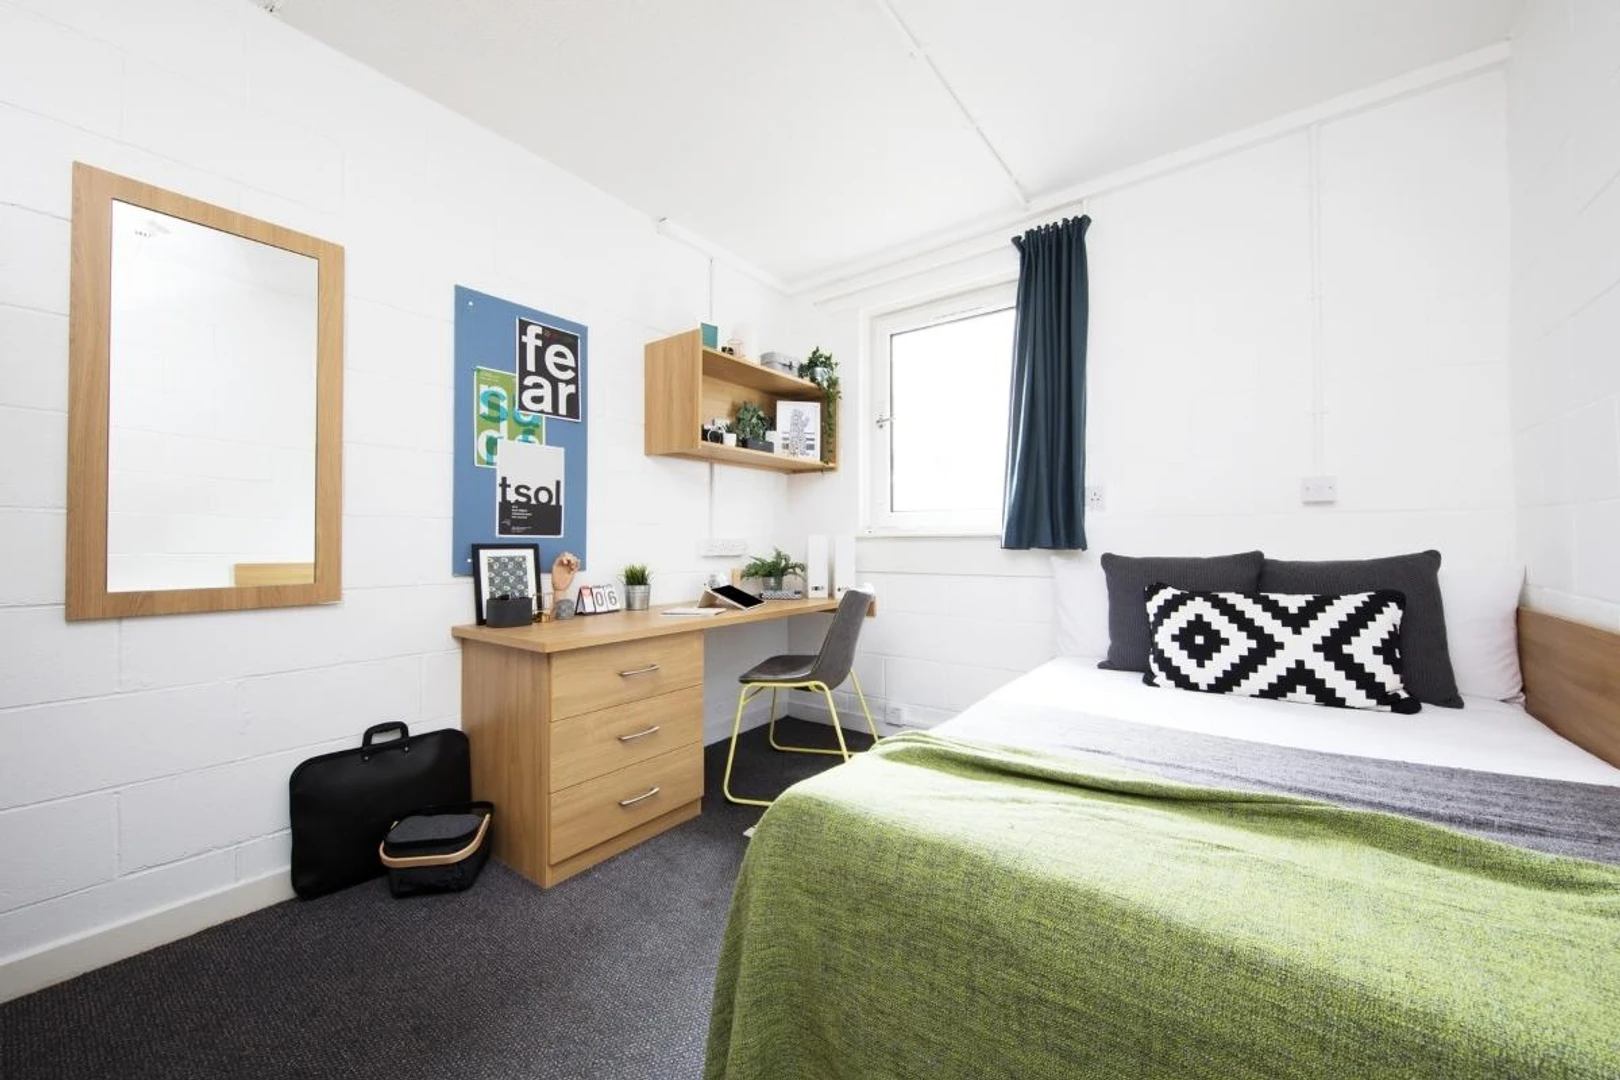 Alquiler de habitación en piso compartido en Aberdeen